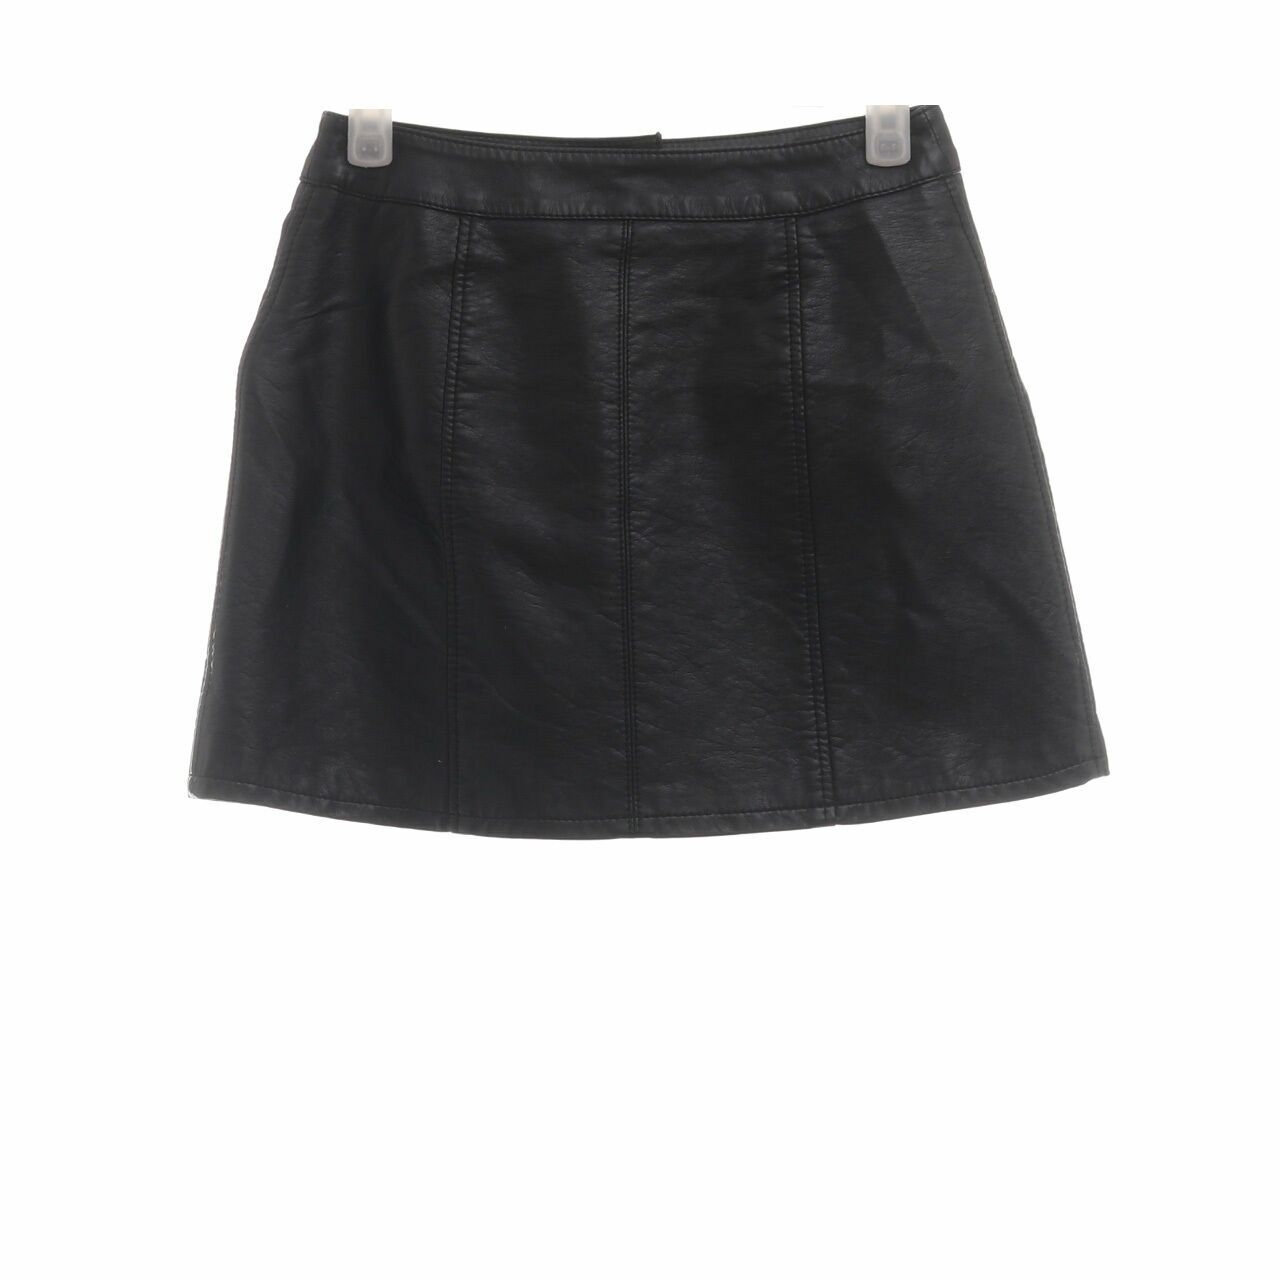 H&M Black Leather Mini Skirt	